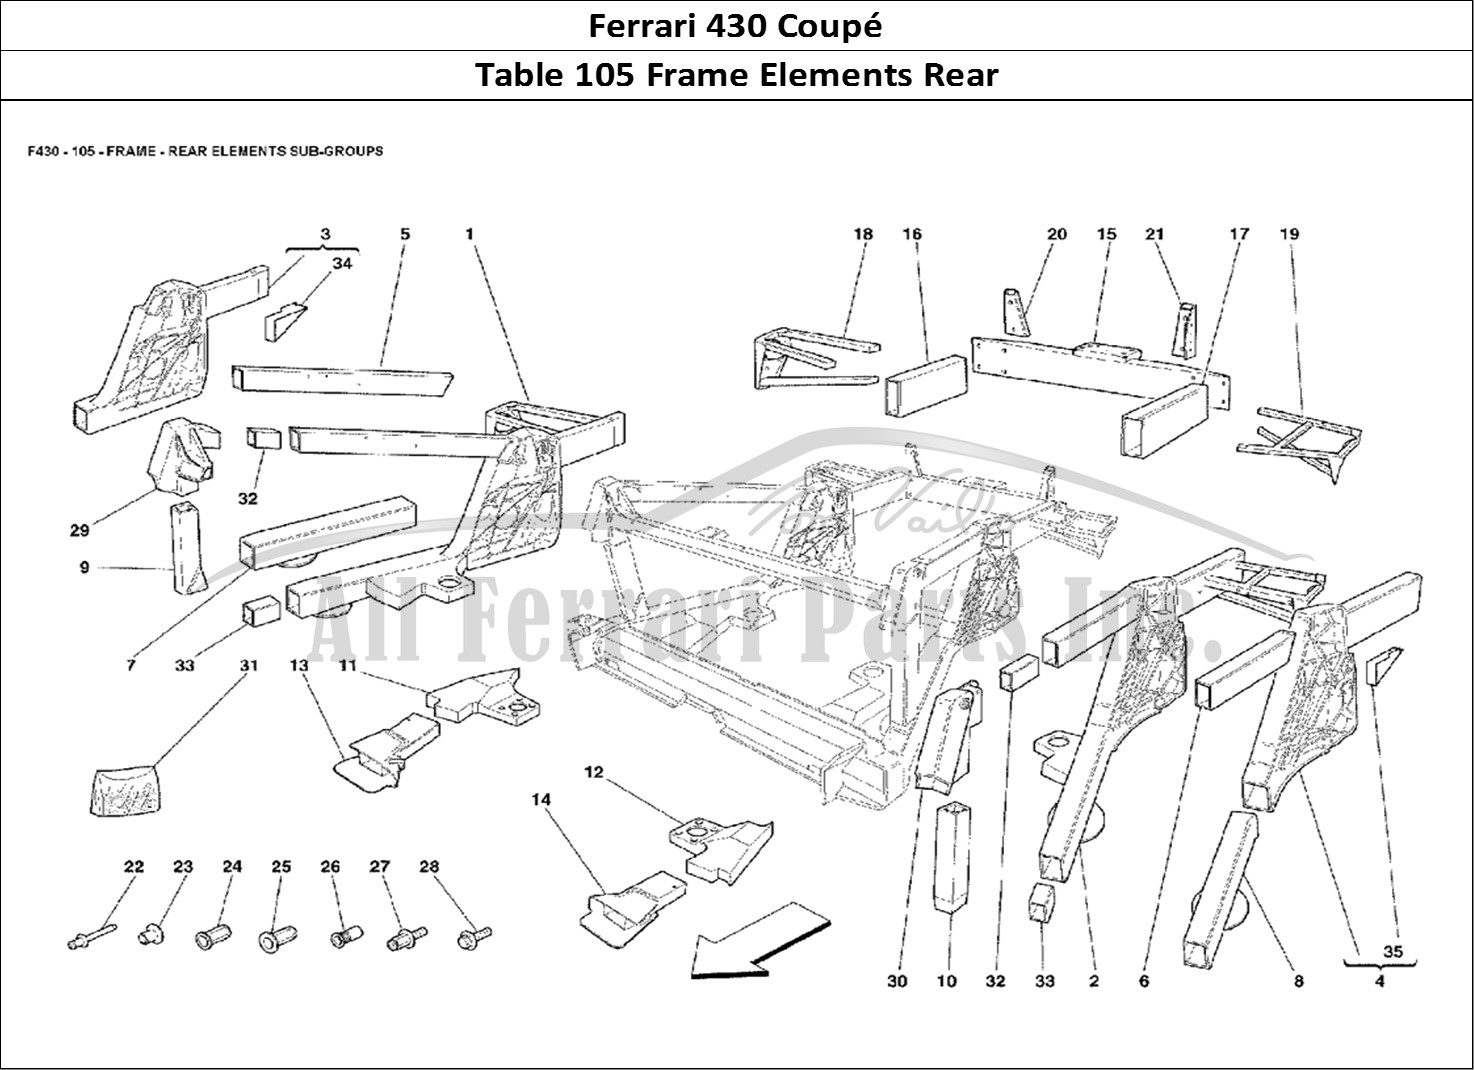 Ferrari Parts Ferrari 430 Coup Page 105 Frame - Rear Elements Sub